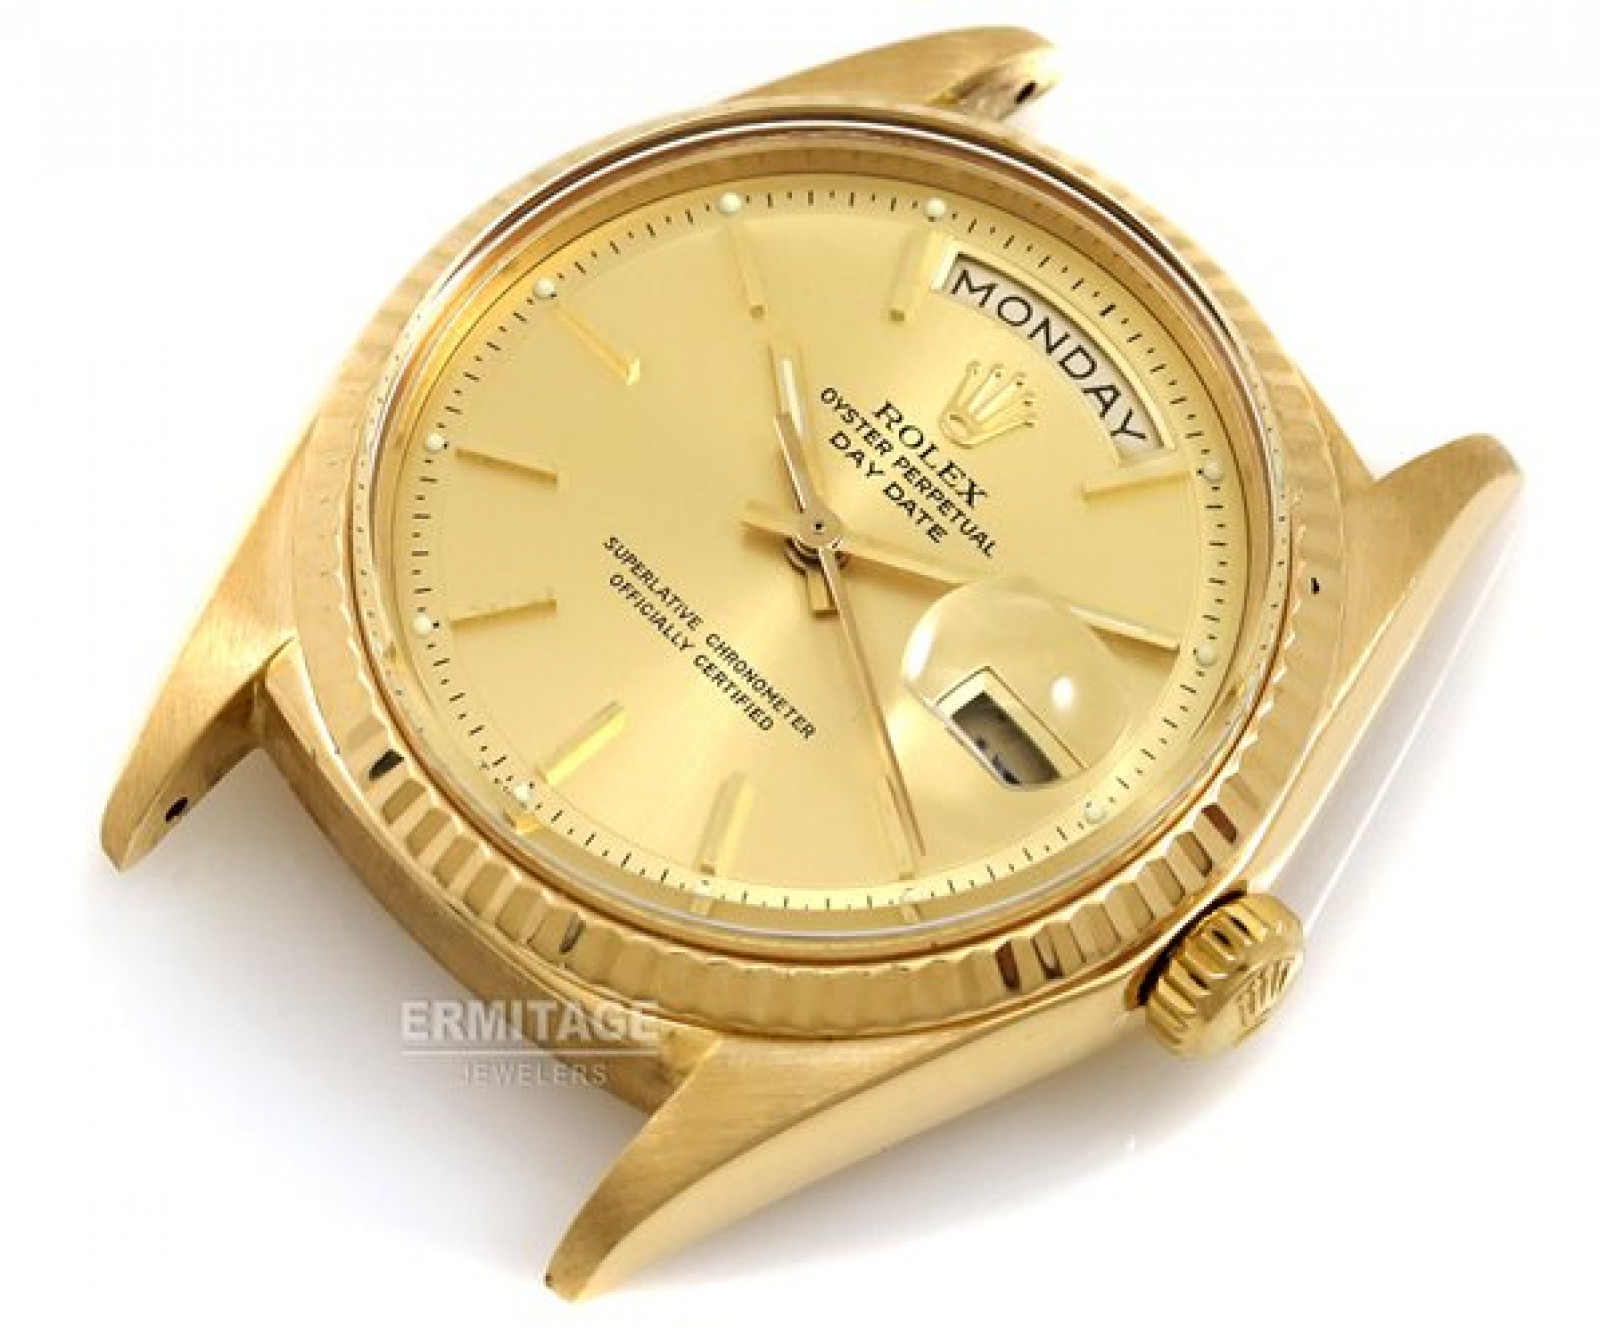 Vintage Rolex Day-Date 1803 Gold Year 1971